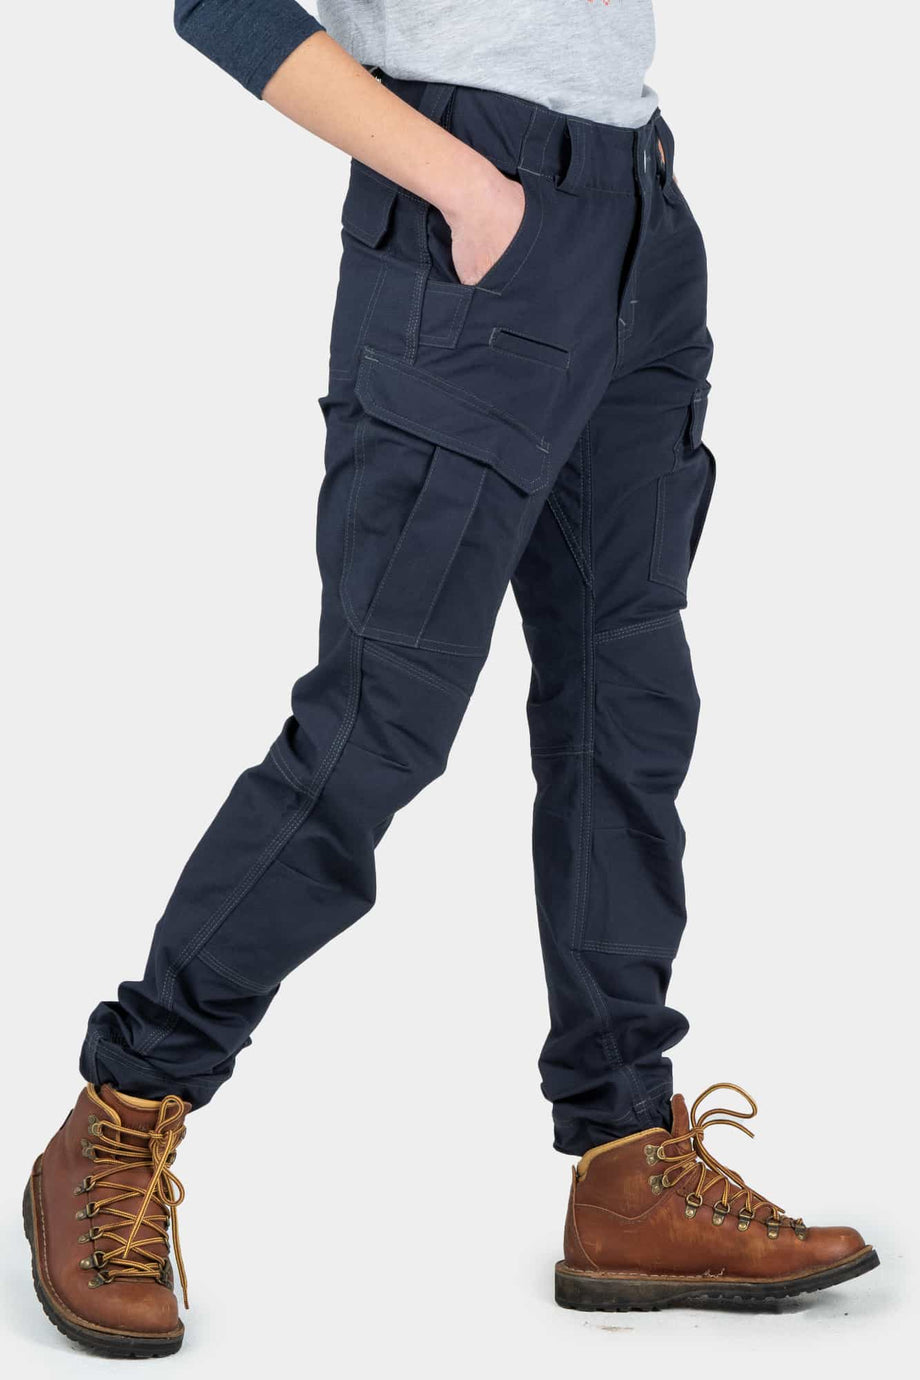 Snappy Trouser Golf Pants - Navy Blue - KINONA